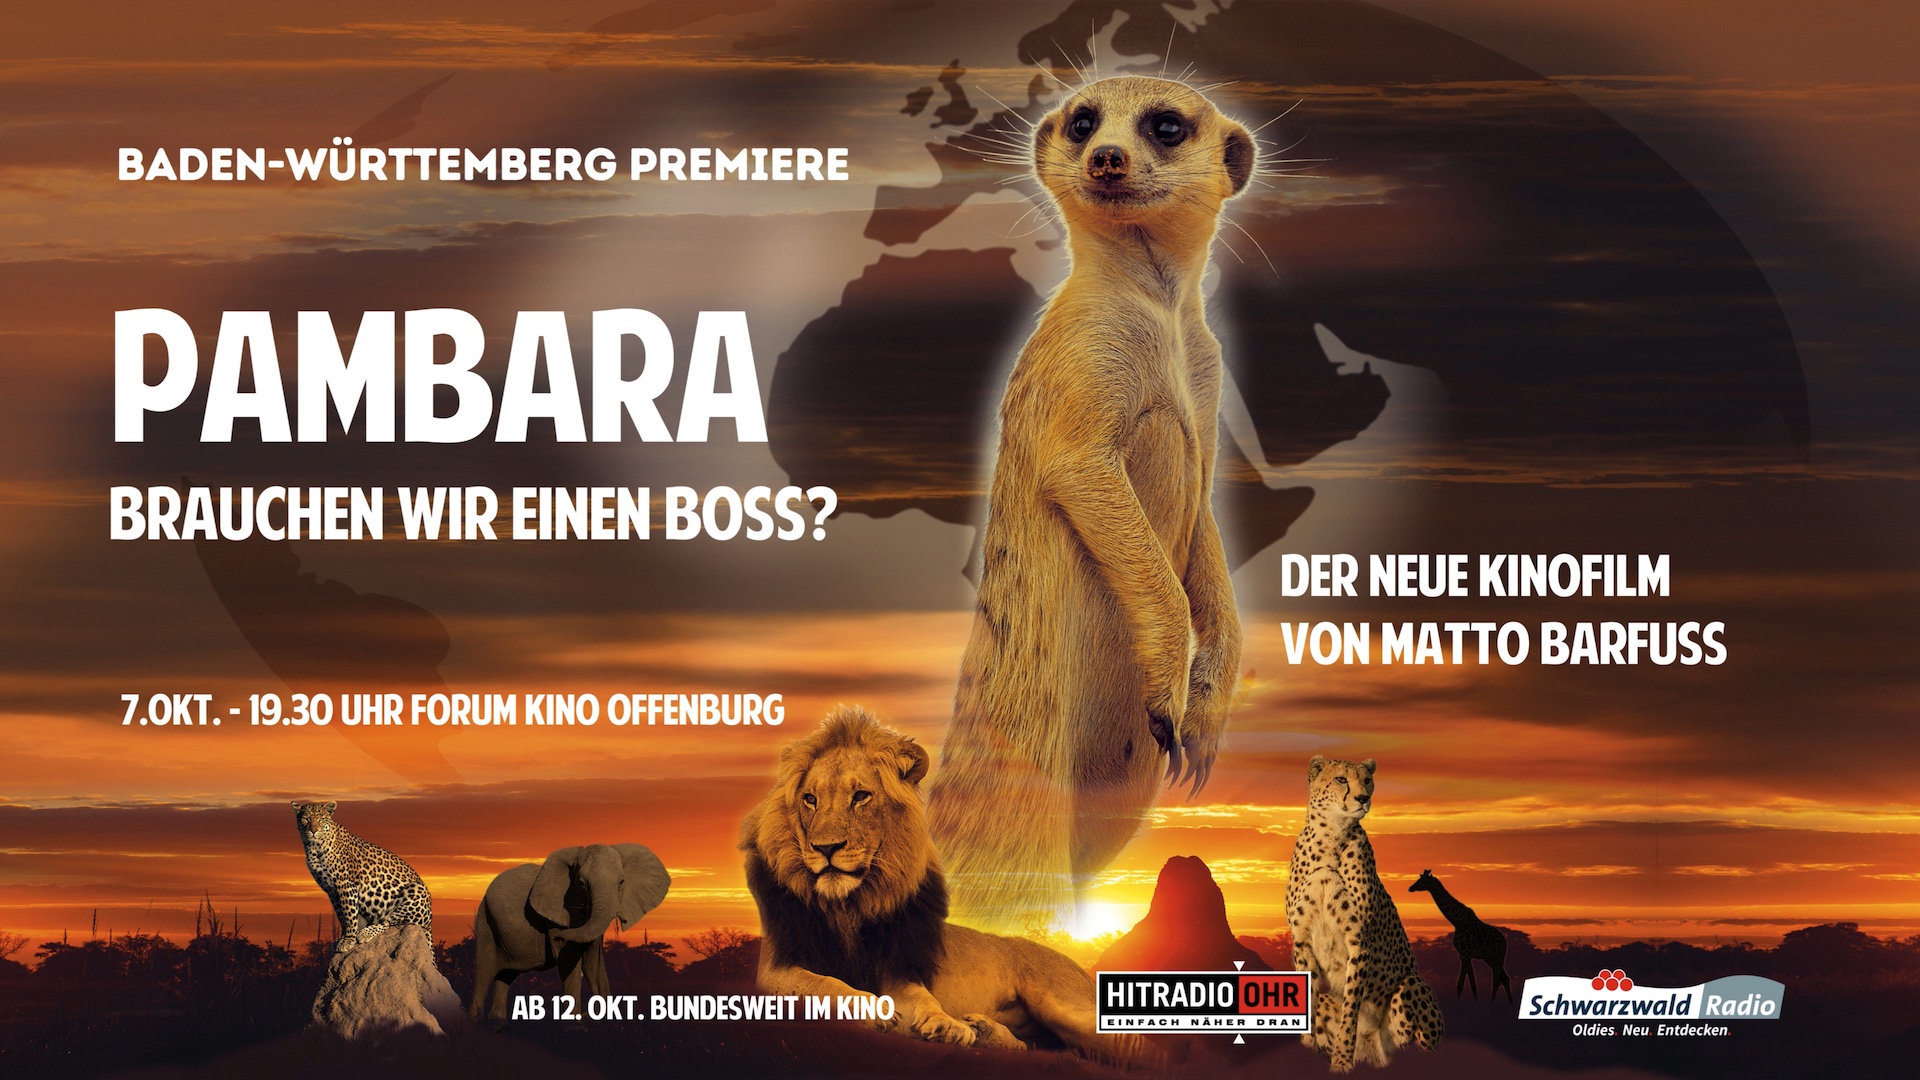 Baden-Württemberg Premiere